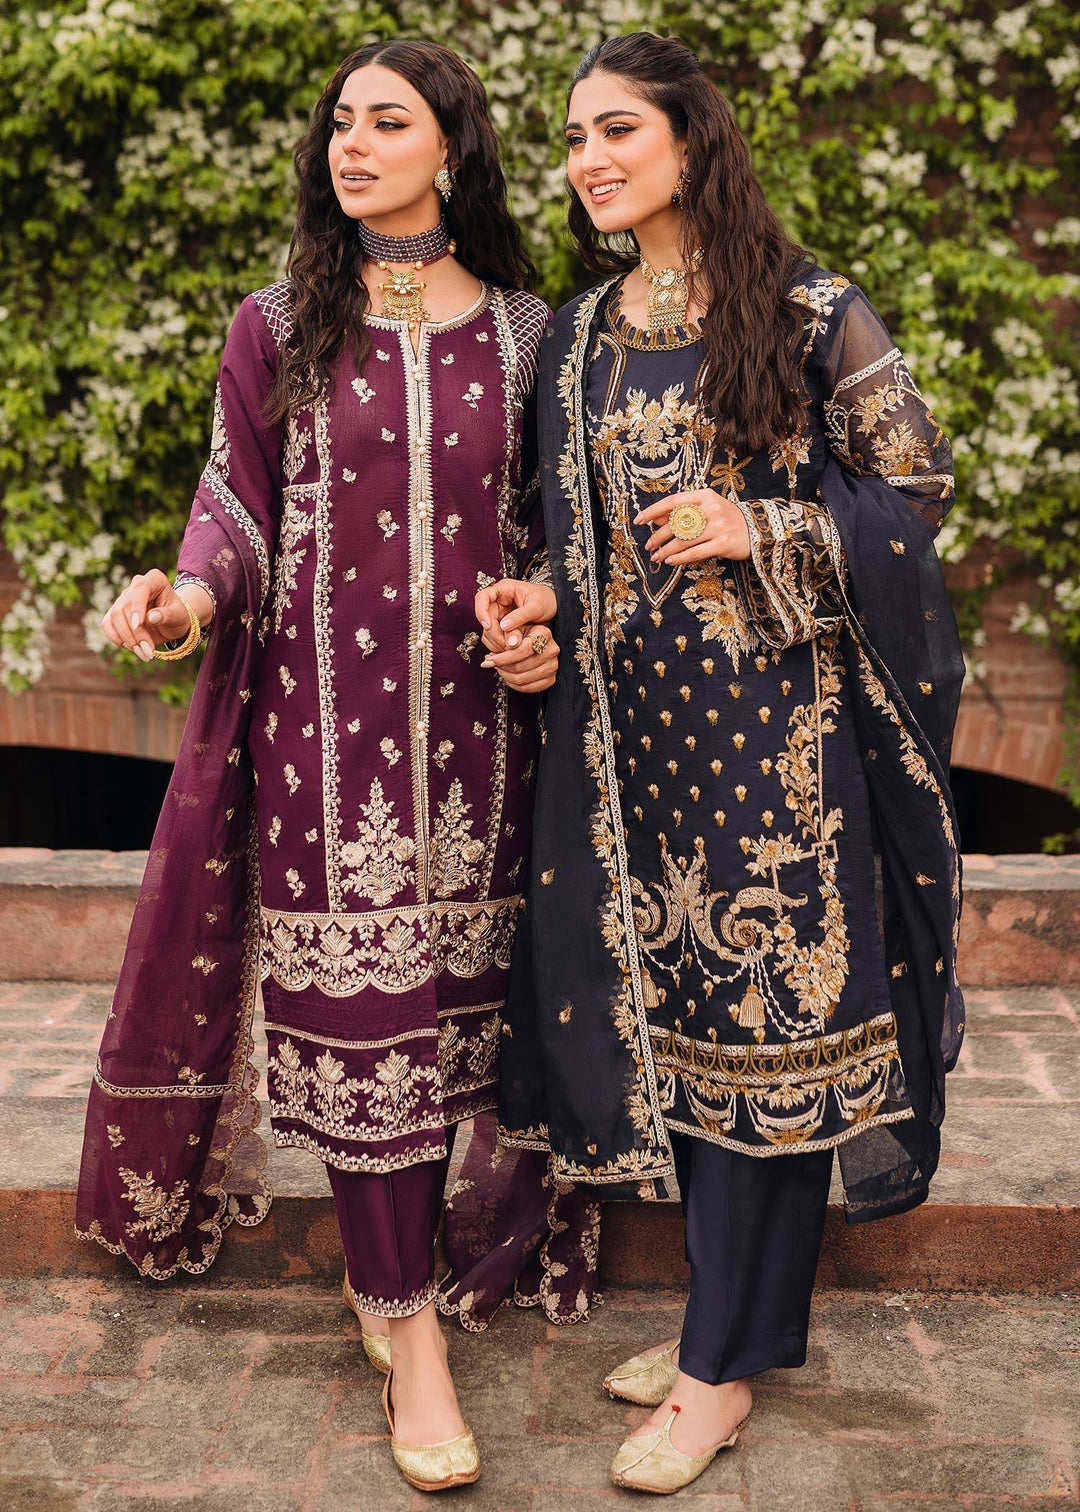 Authentic Brand Pakistani Dresses in USA